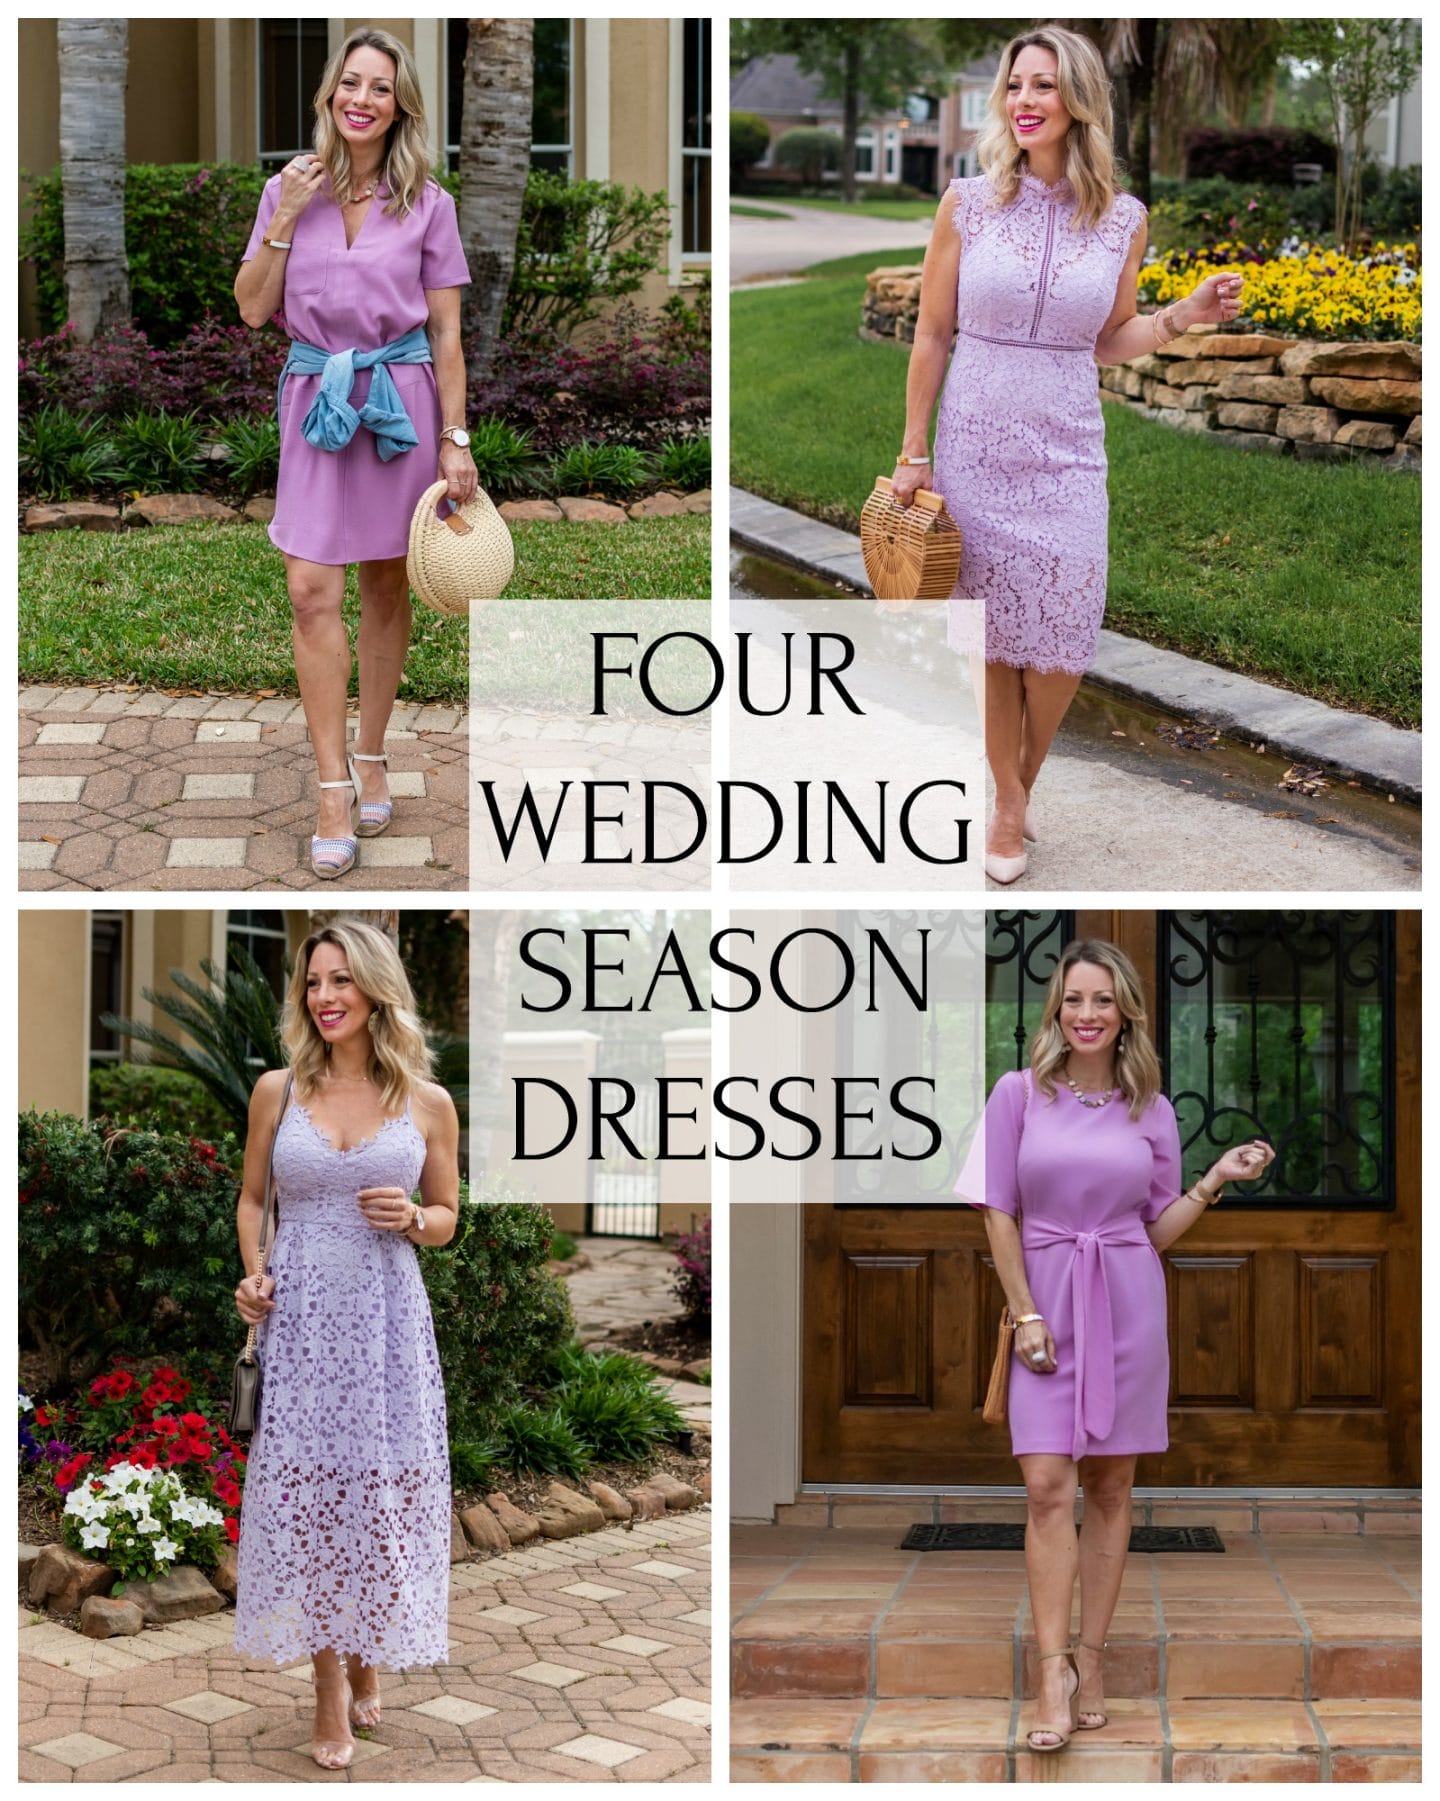 4 WEDDING SEASON DRESSES